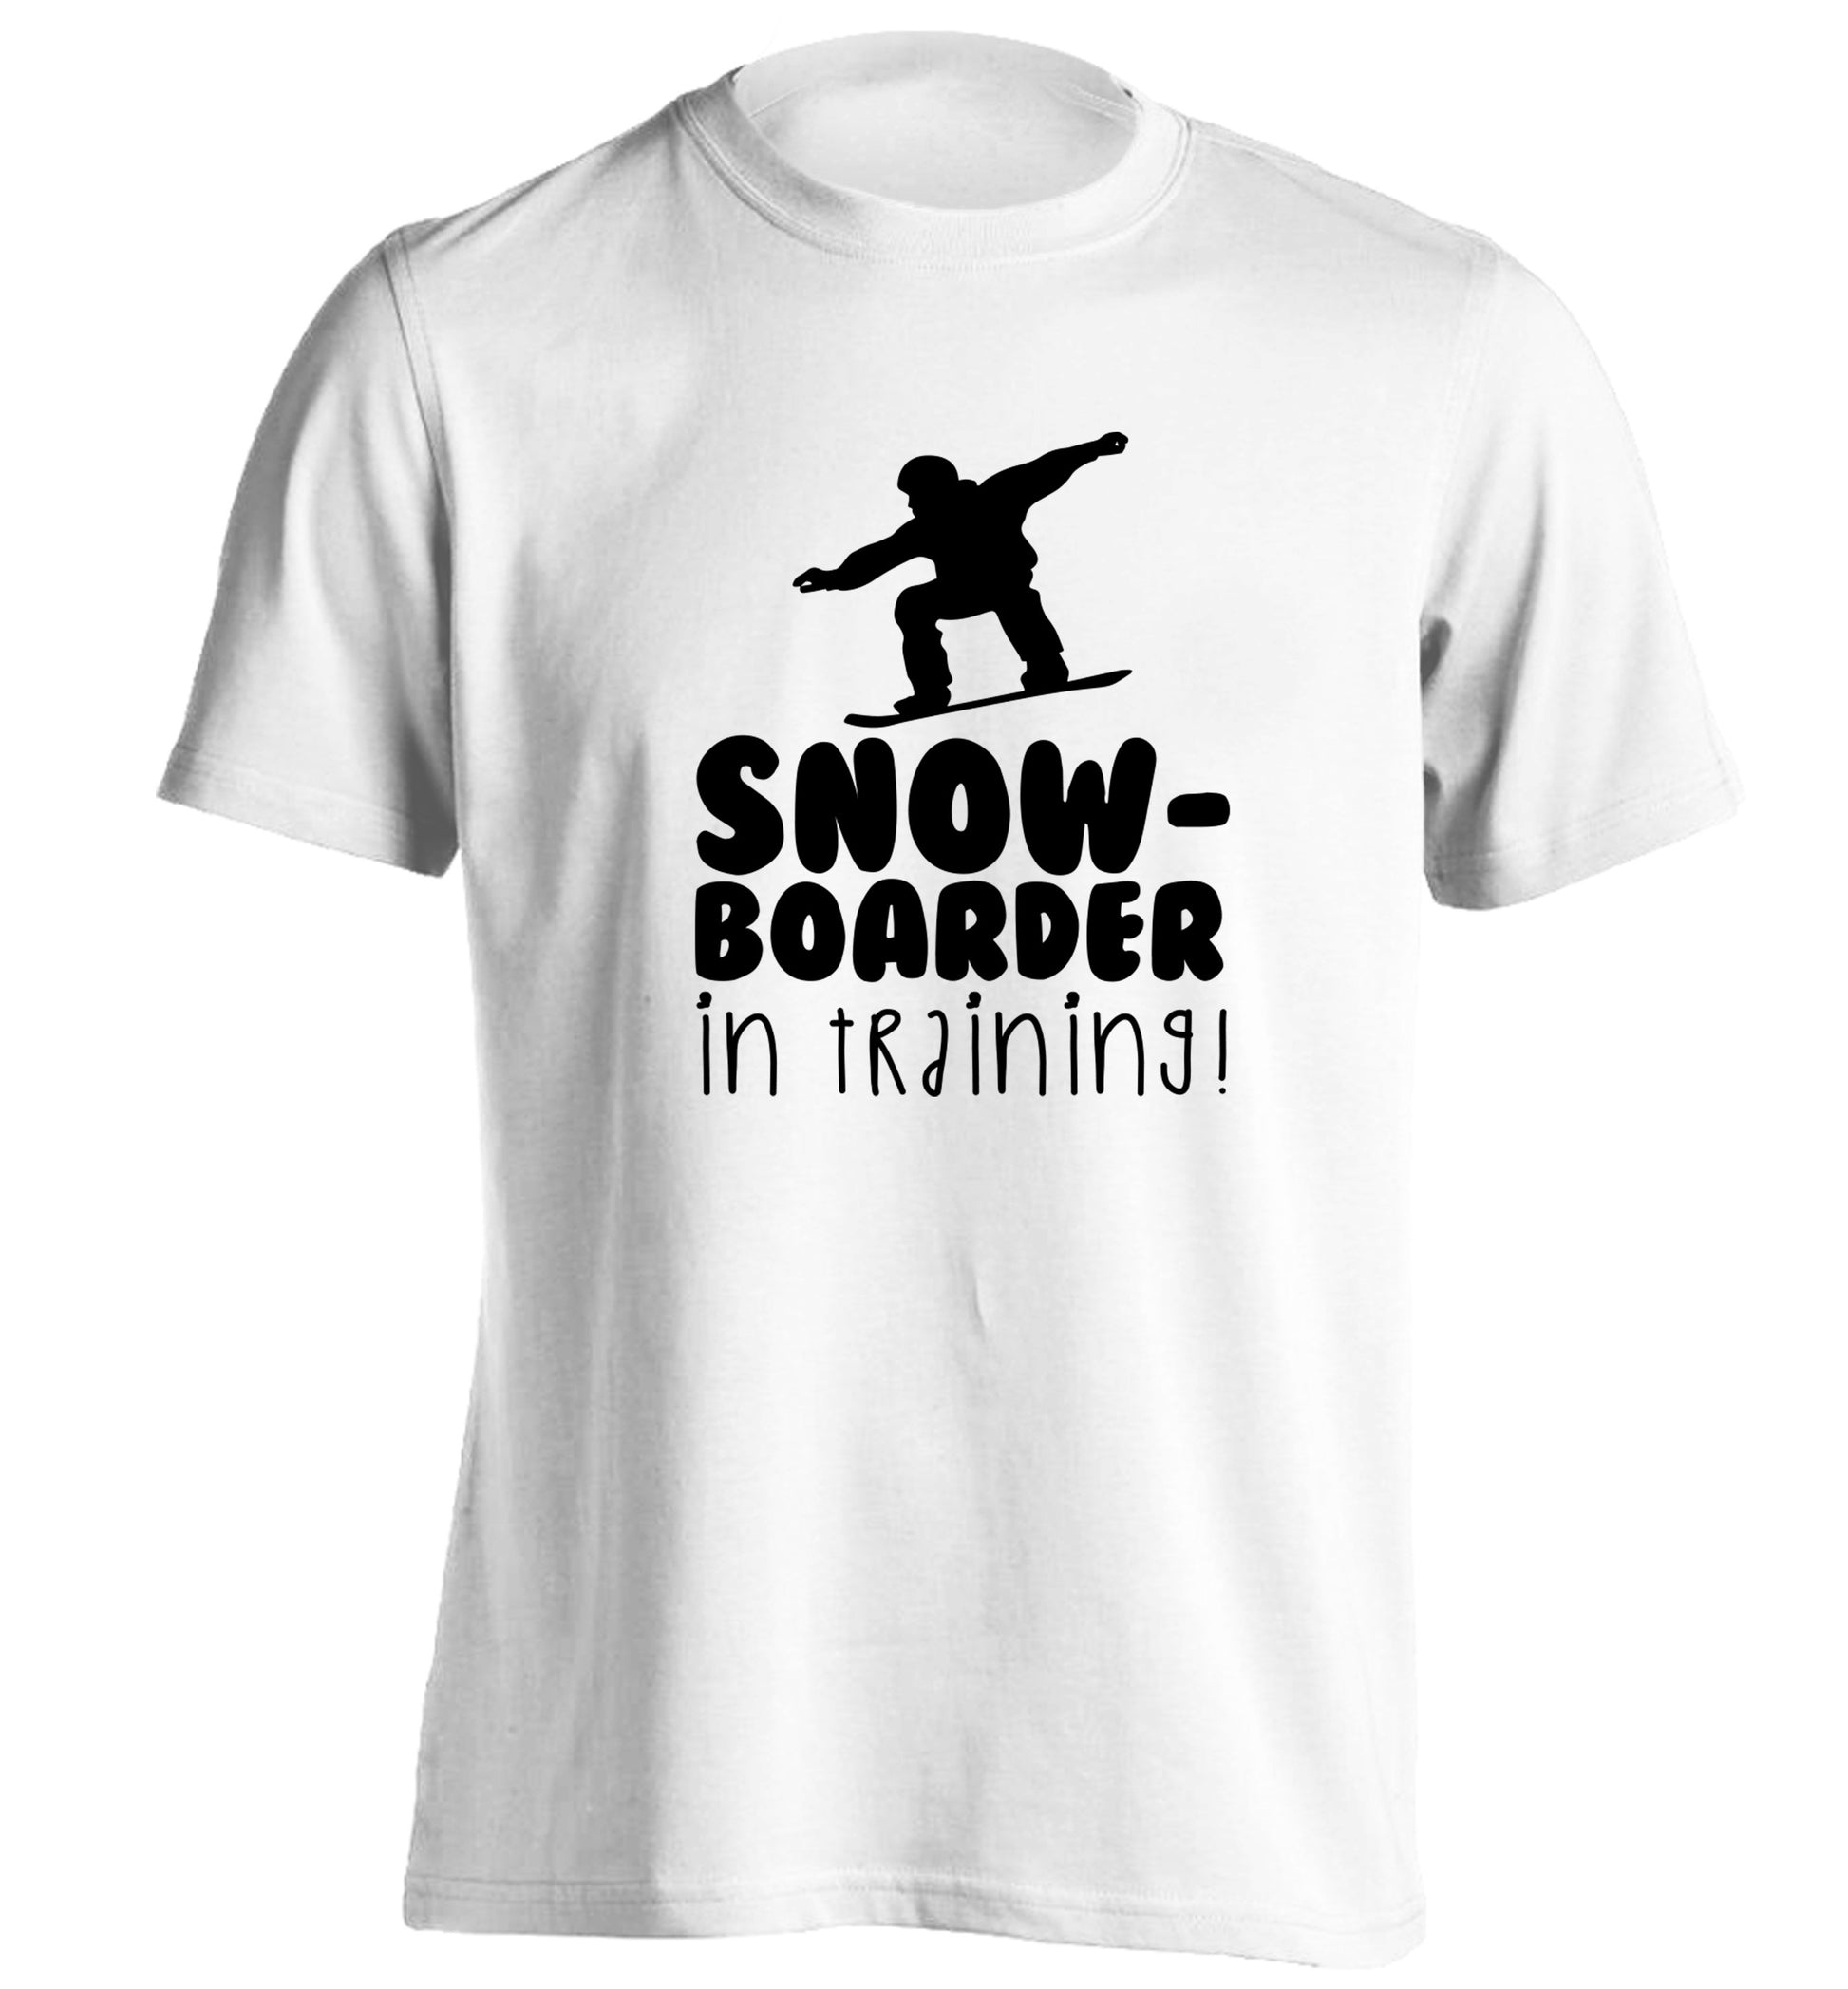 Snowboarder in training adults unisex white Tshirt 2XL